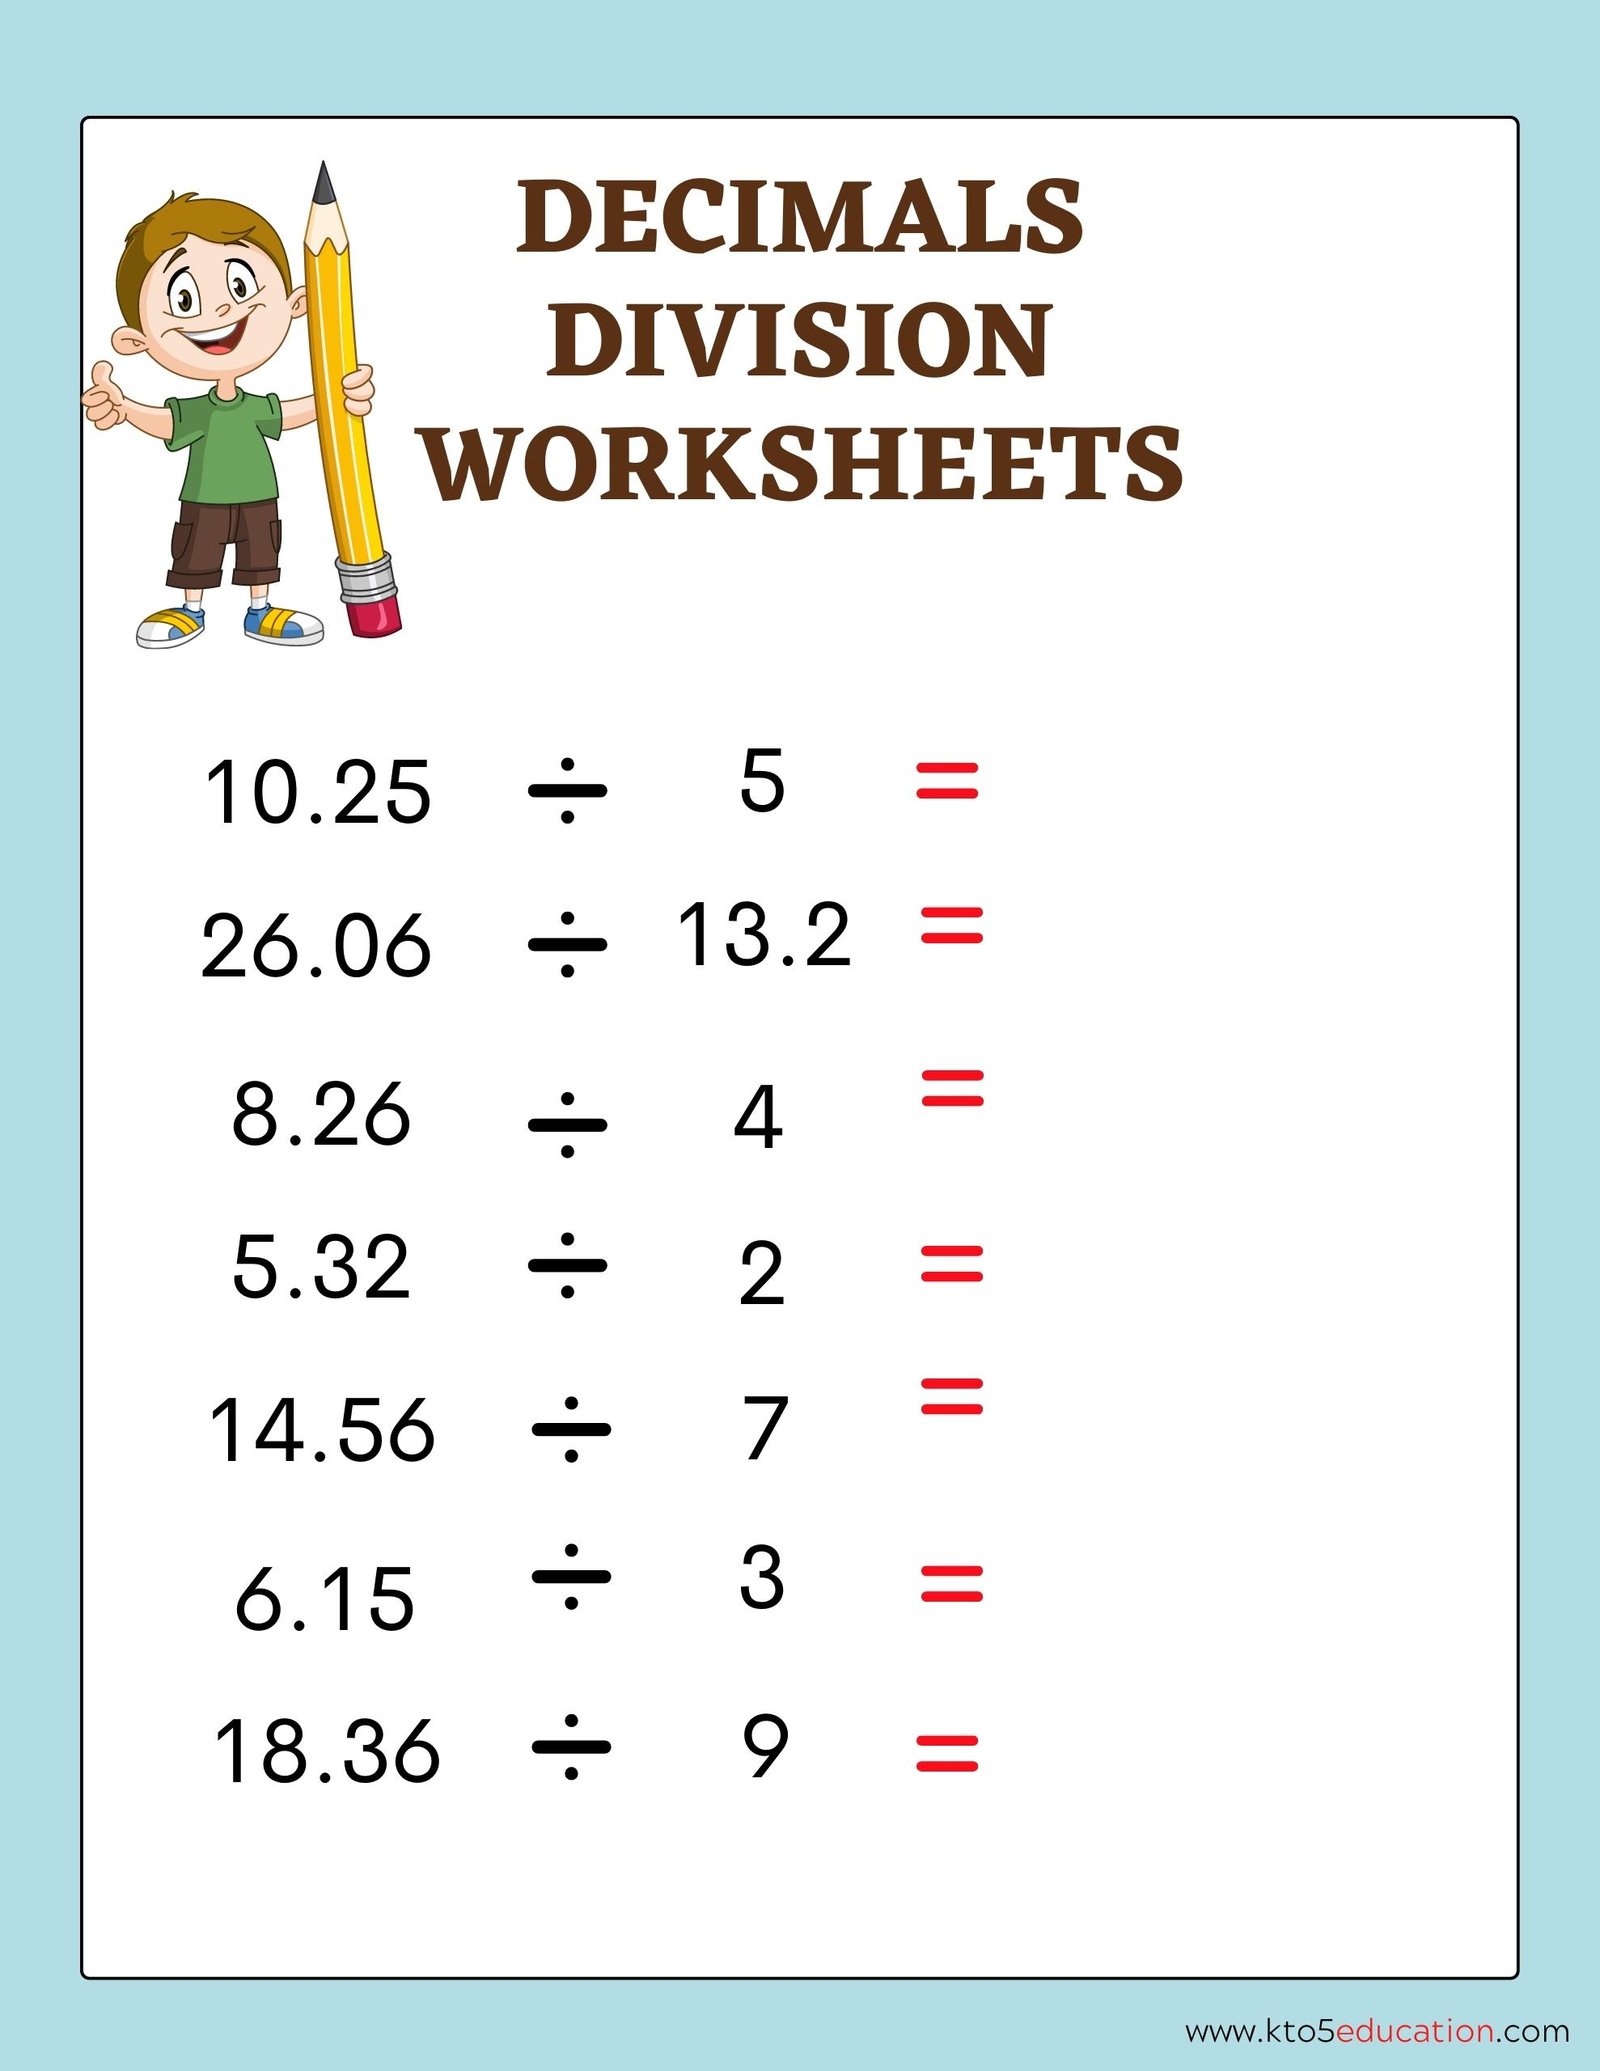 Division of Decimals Worksheet